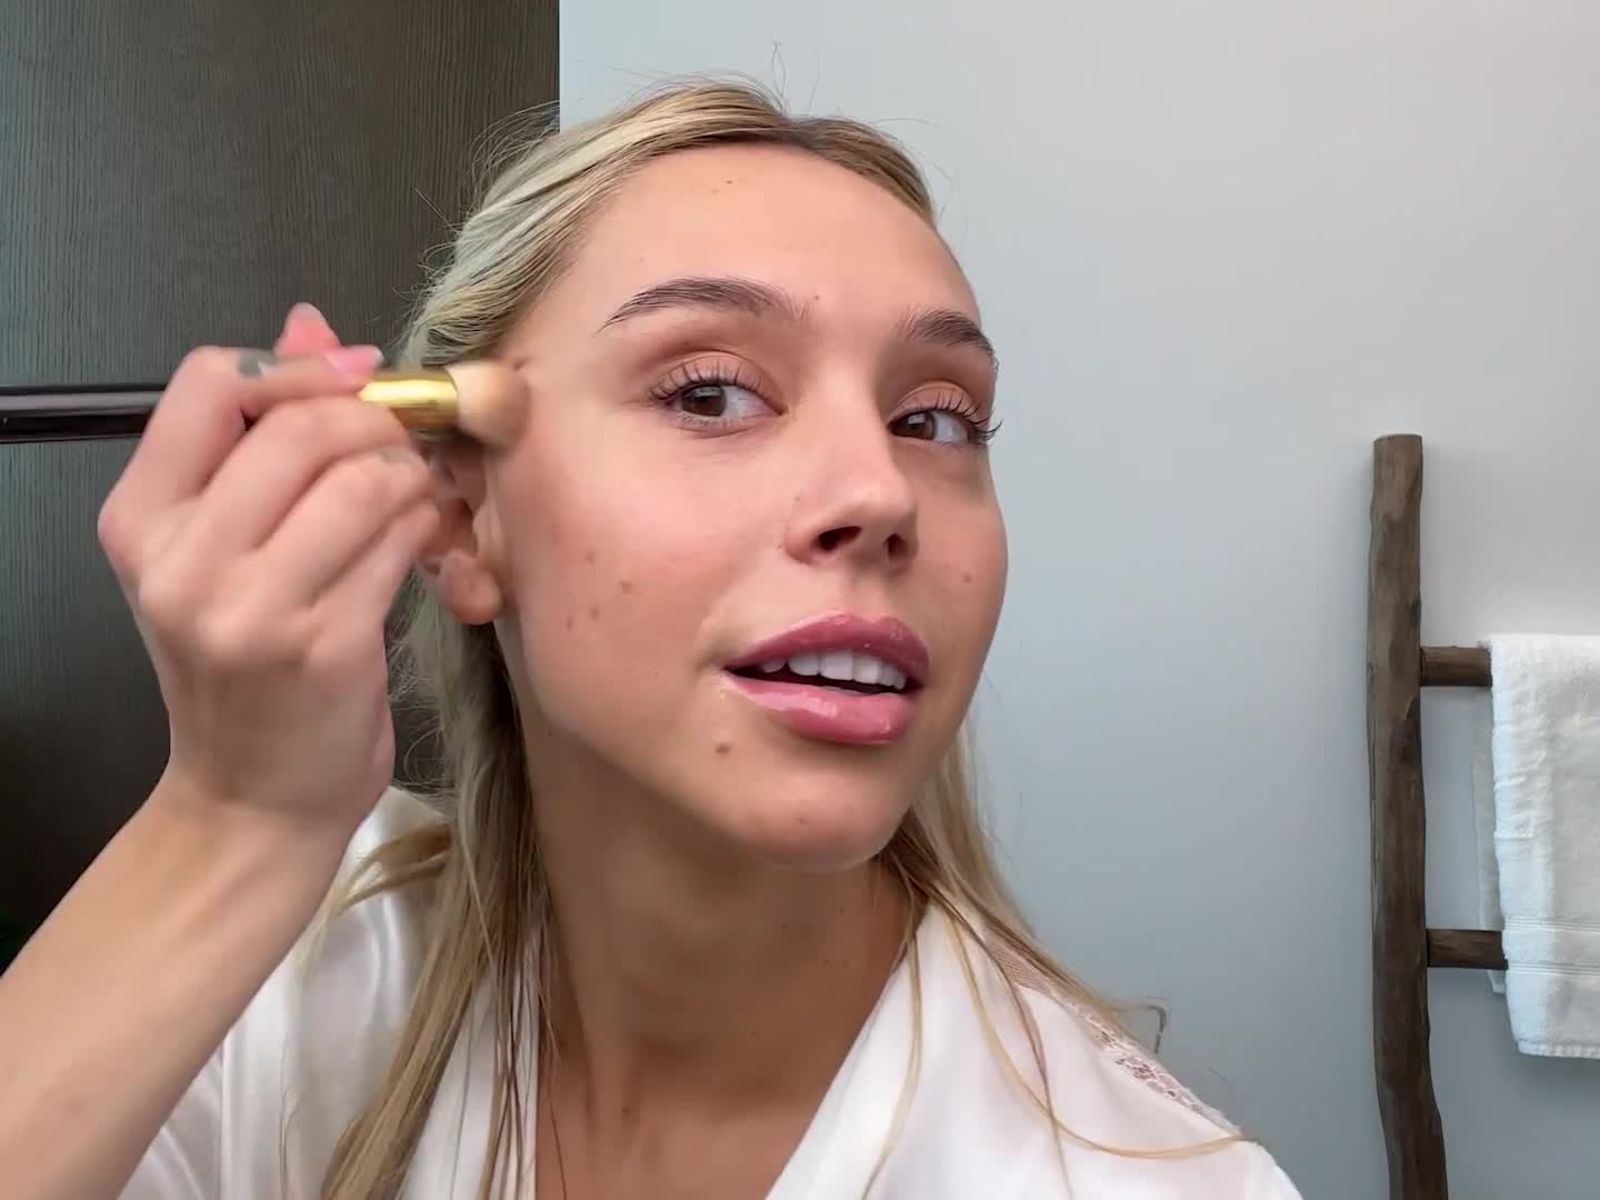 Watch Alexis Ren Do Her Face-Lifting Makeup Routine